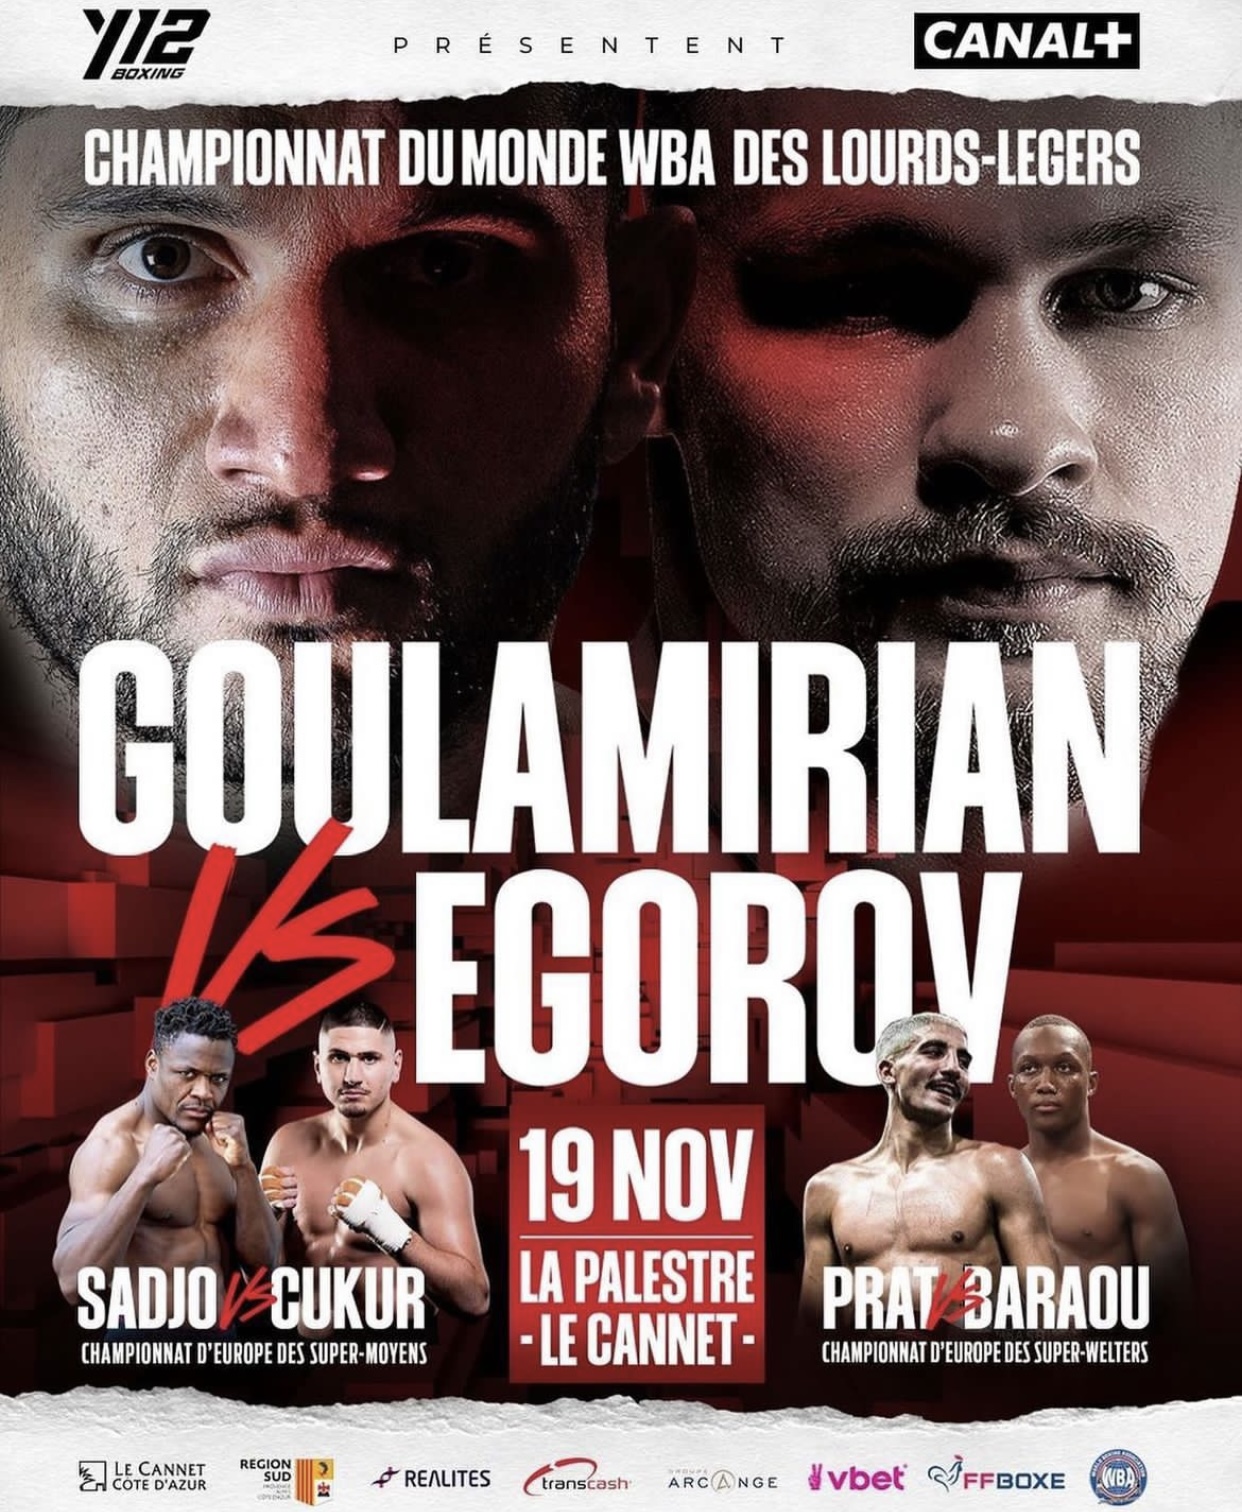 Goulamirian-Egorov: Battle of giants at Le Cannet